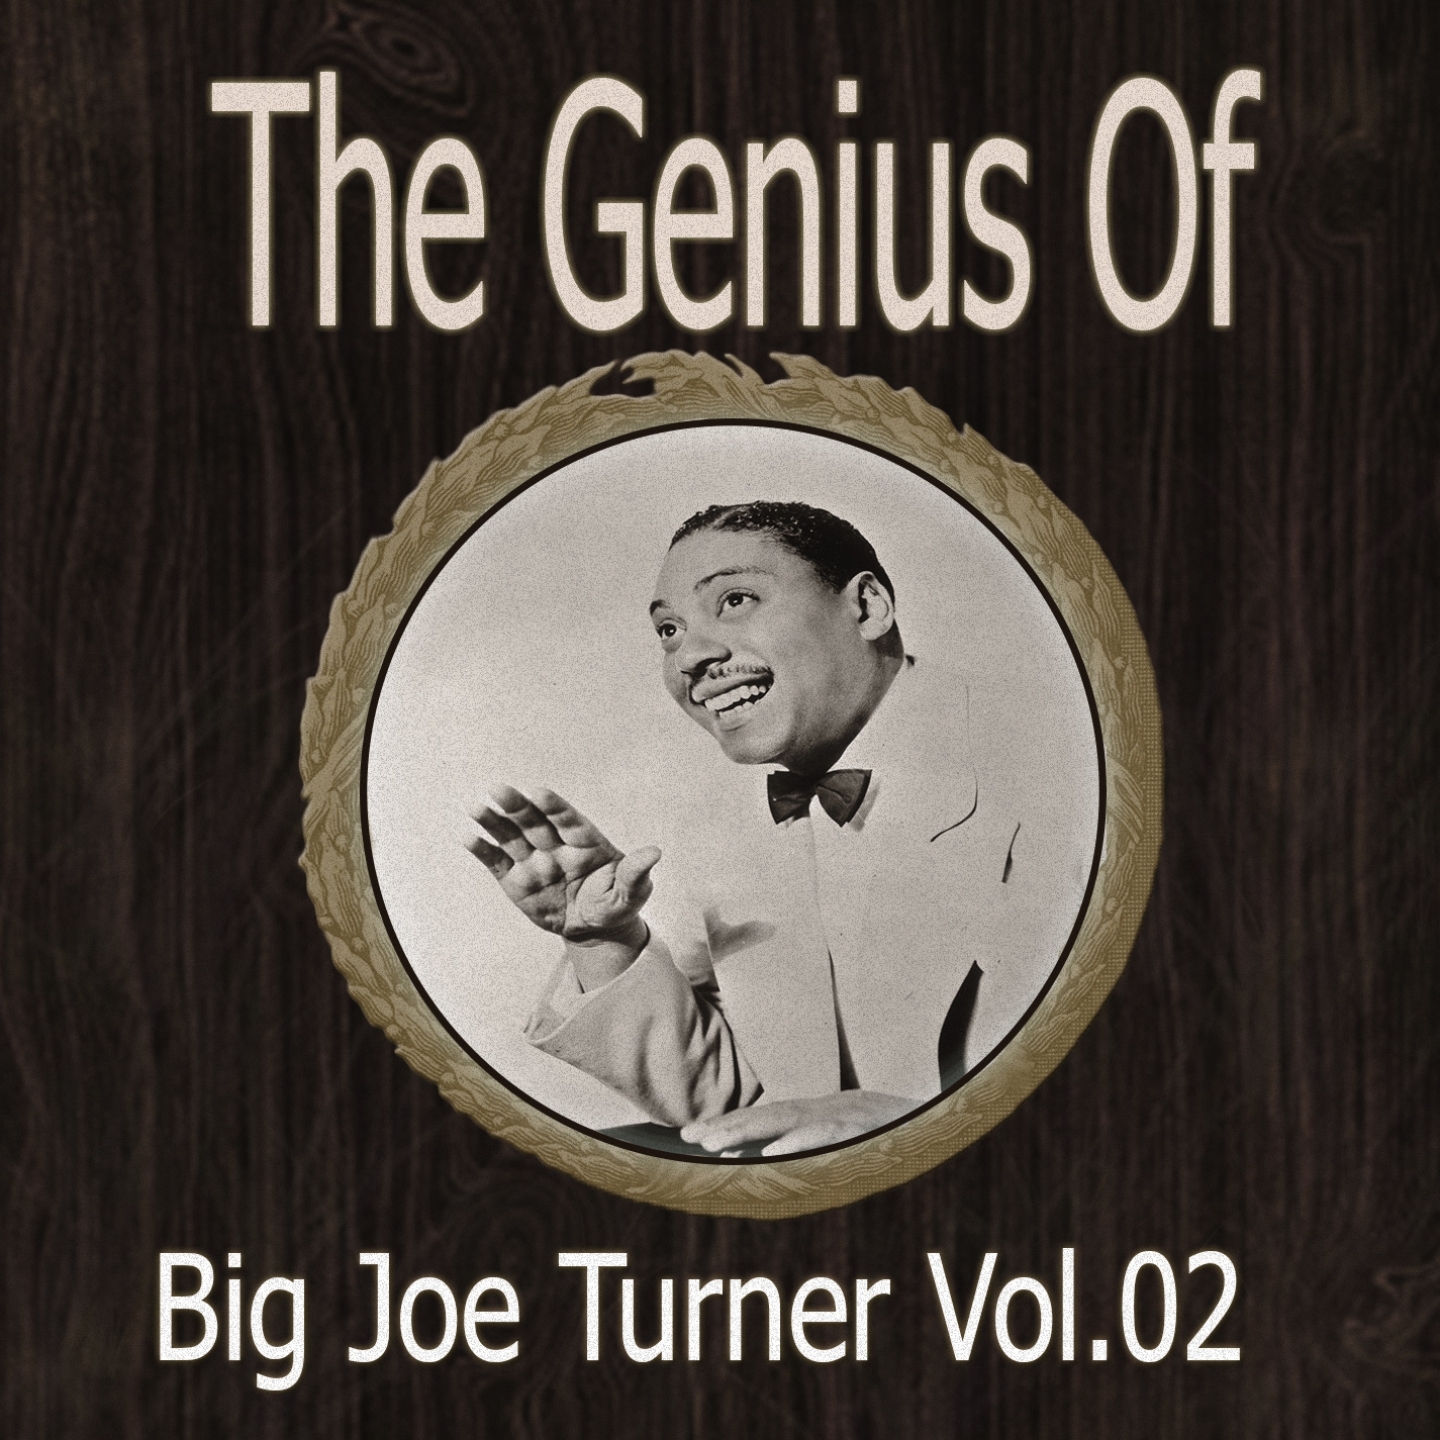 The Genius of Big Joe Turner Vol 02